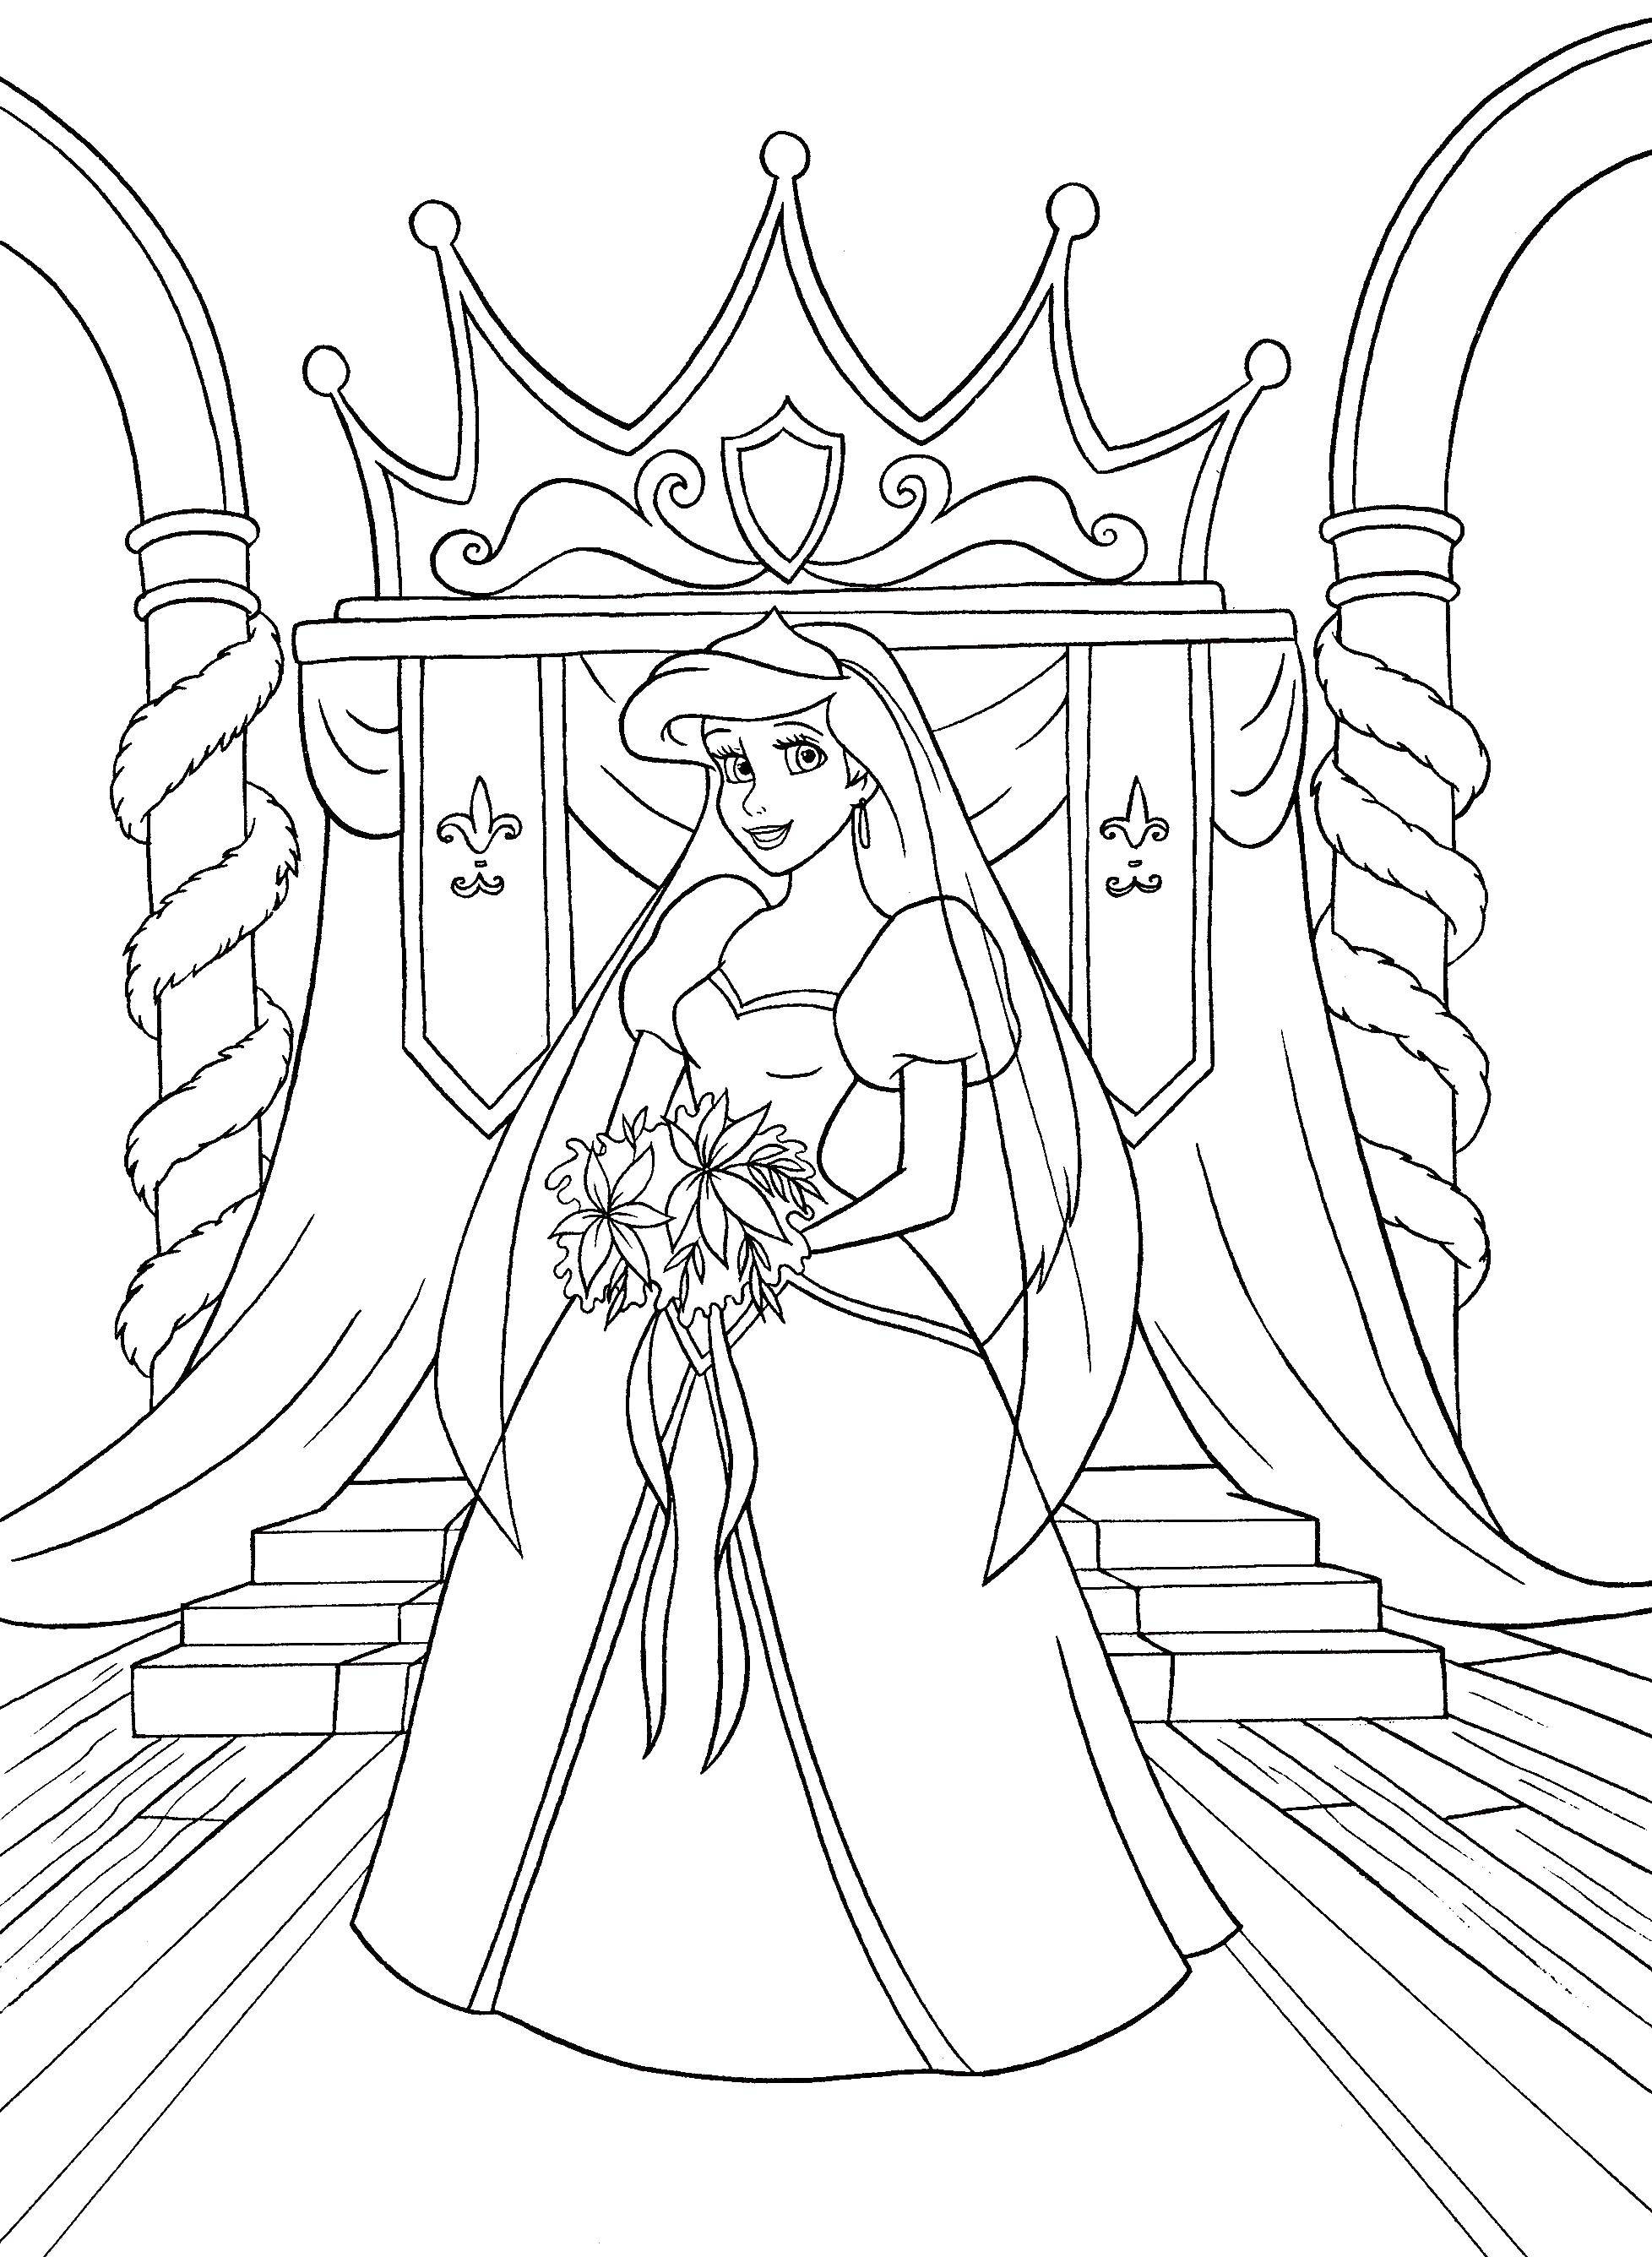 Coloring Bride Princess. Category Princess. Tags:  the , Princess, bride, cartoons.